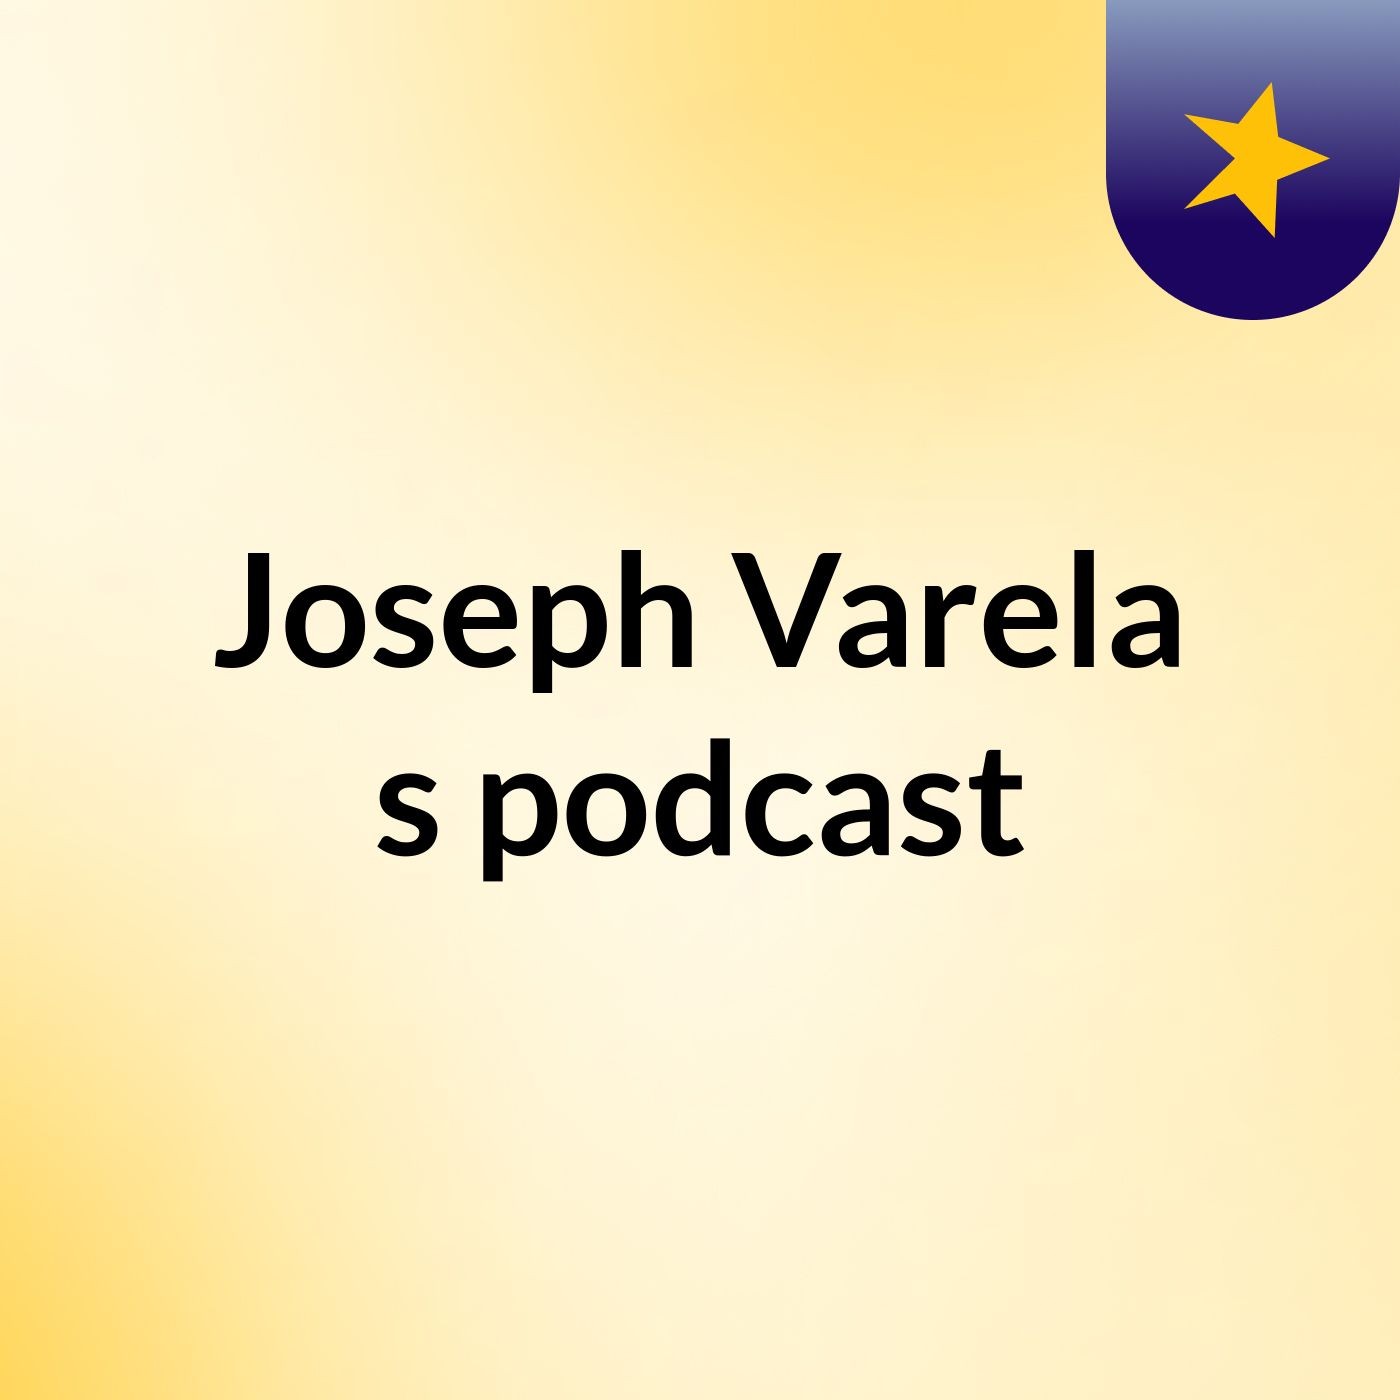 Episode 3 - Joseph Varela's podcast